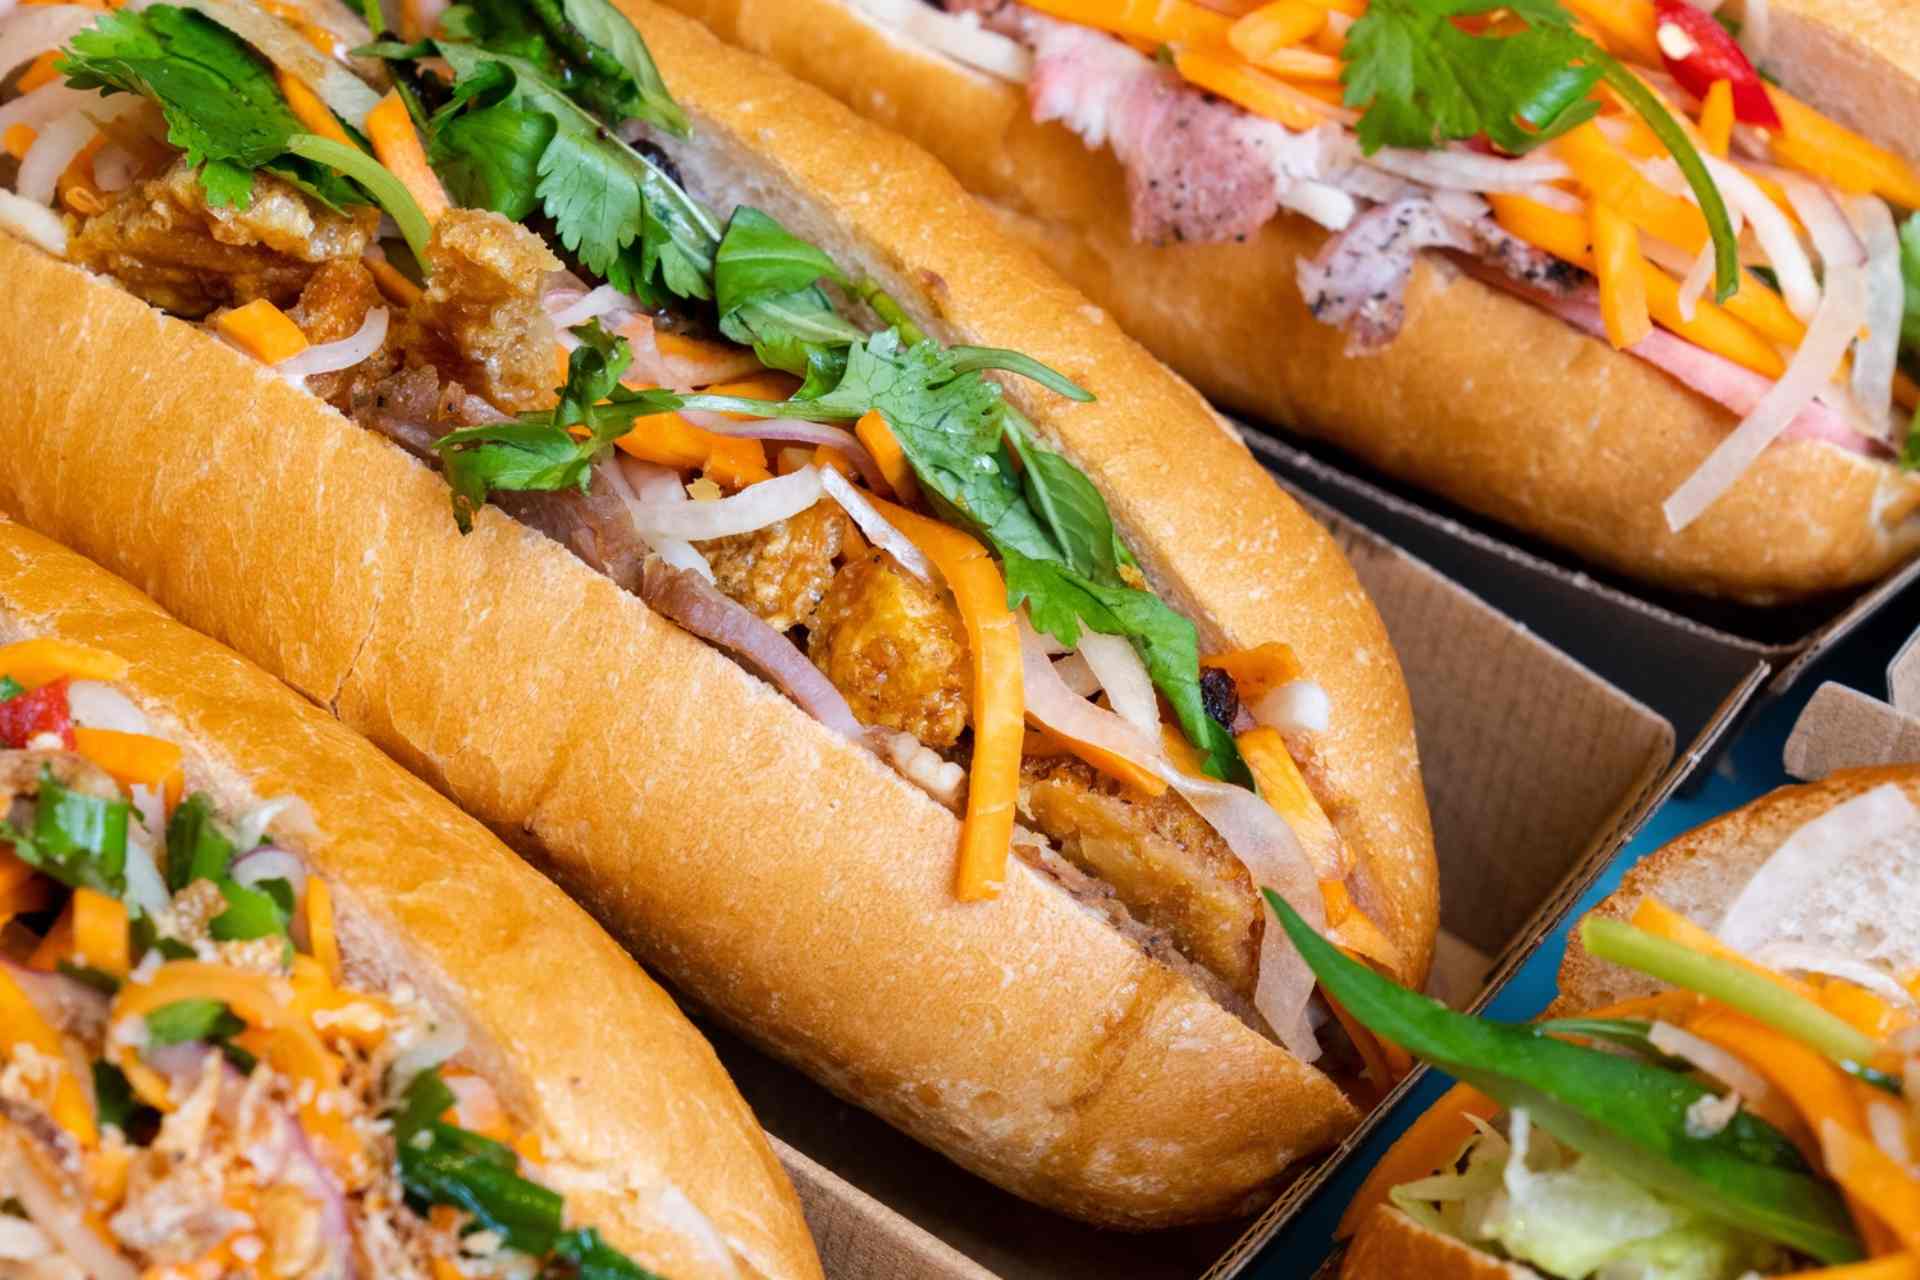 10 Best Restaurants in Zetland to Add to Your List - Saigon Xpress at East Village